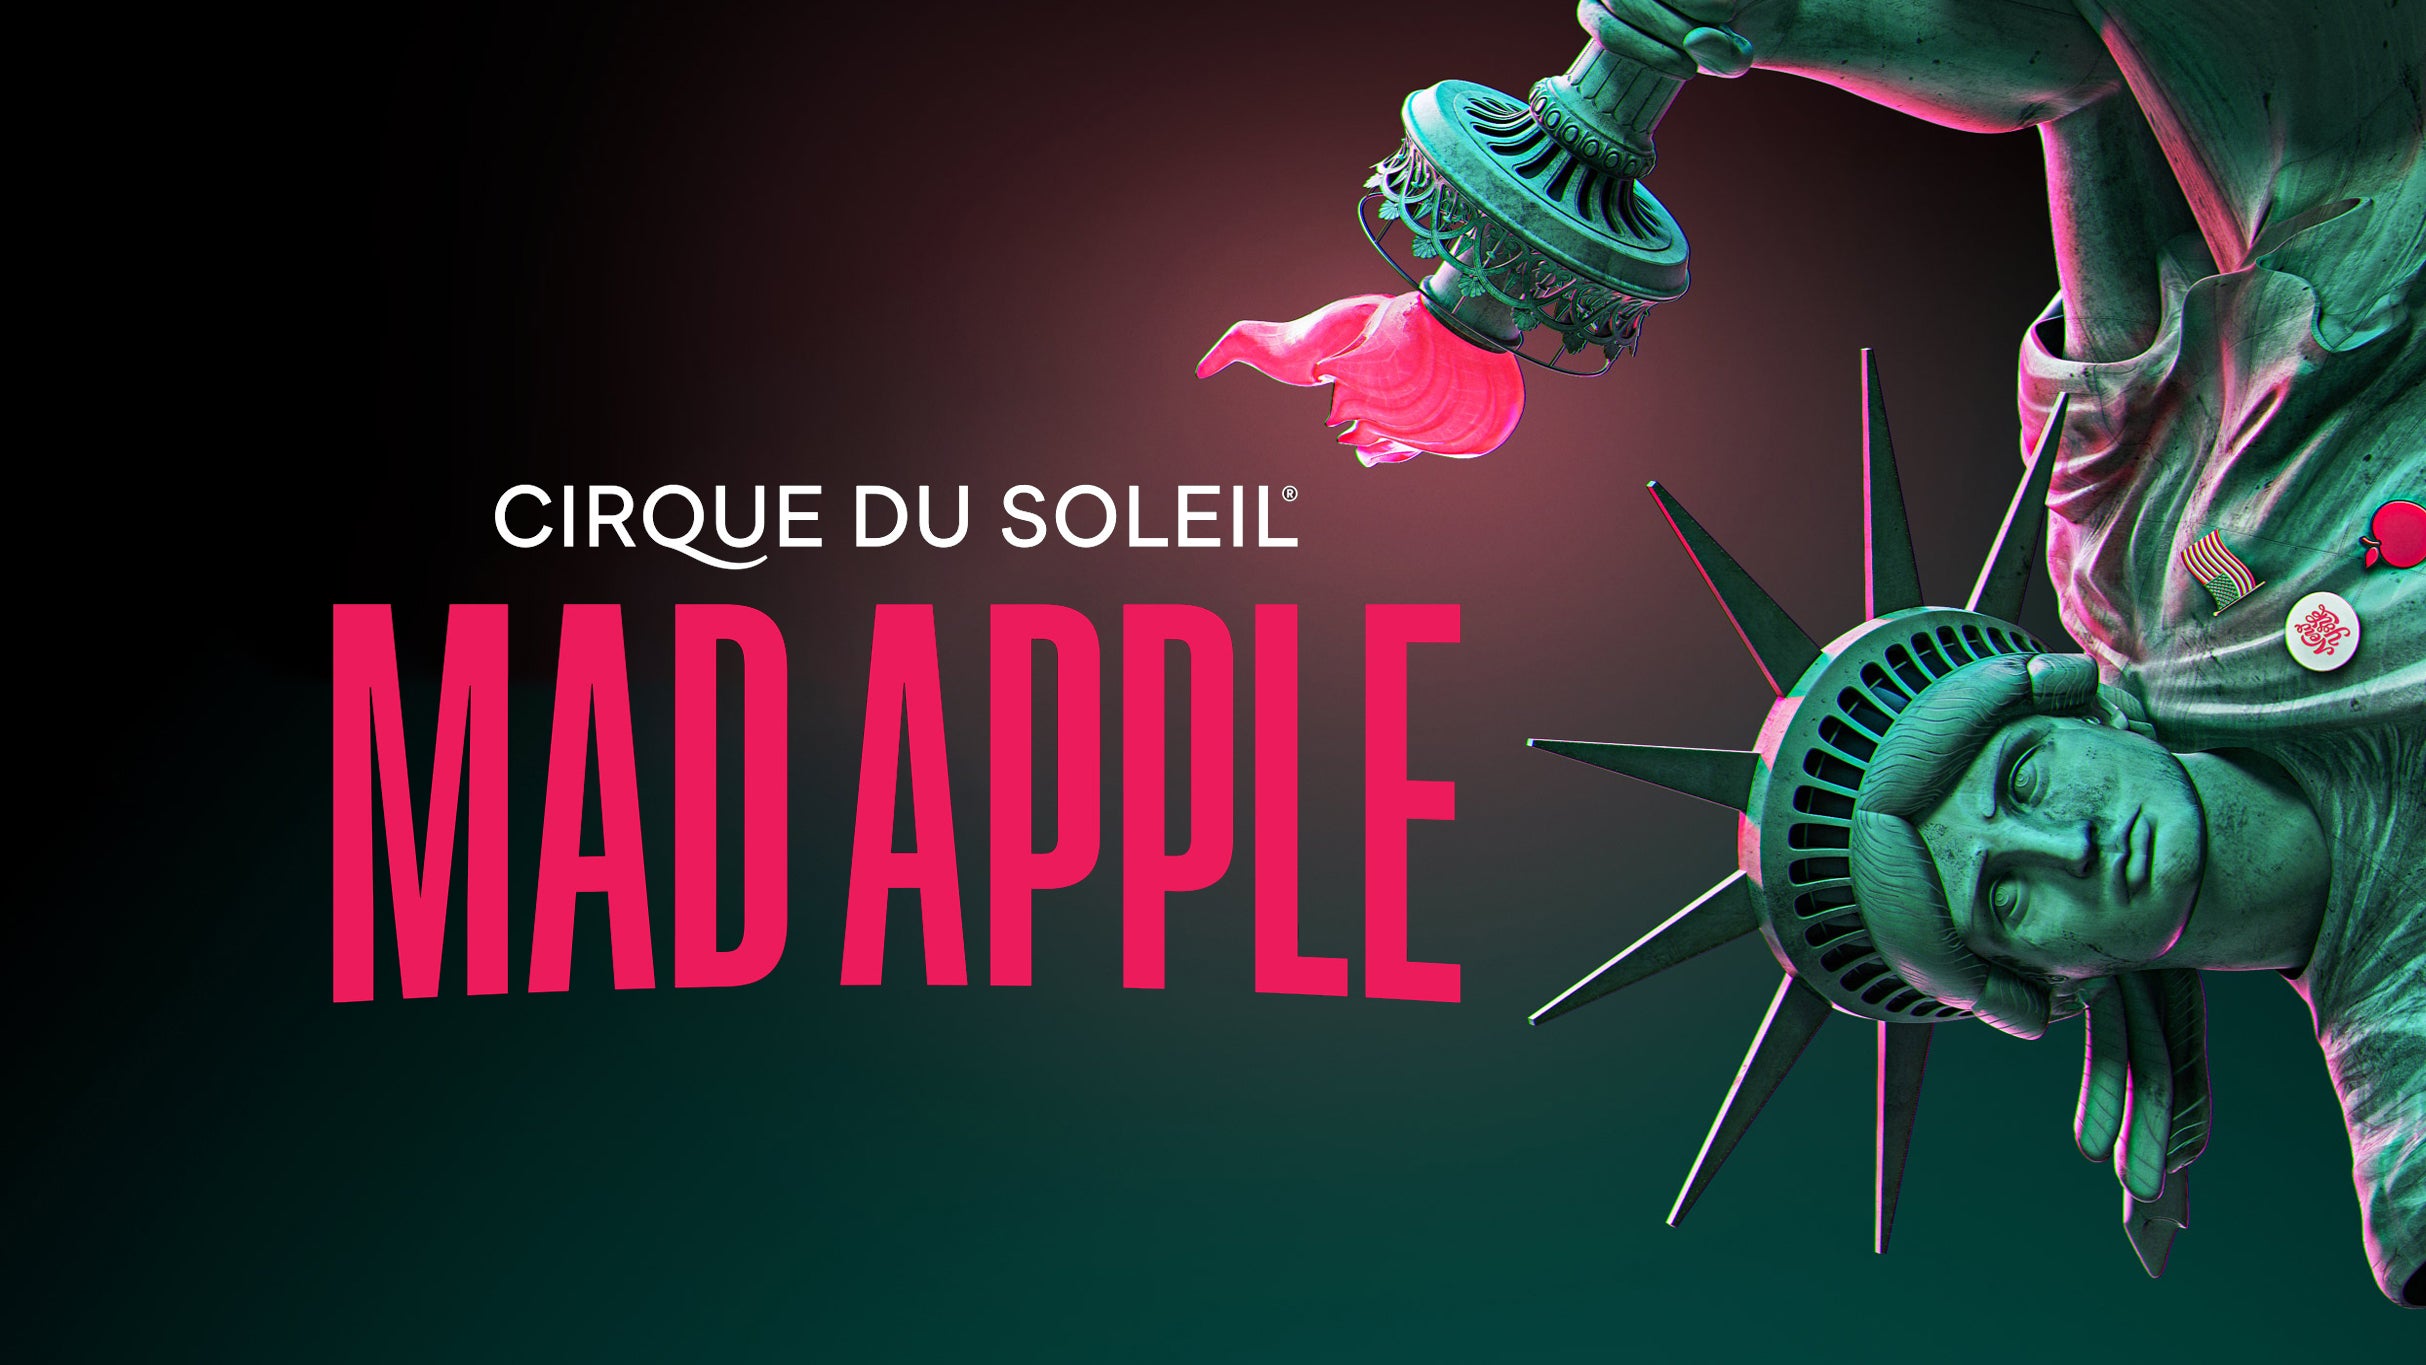 Cirque du Soleil: Mad Apple at New York-New York Theater – Las Vegas, NV